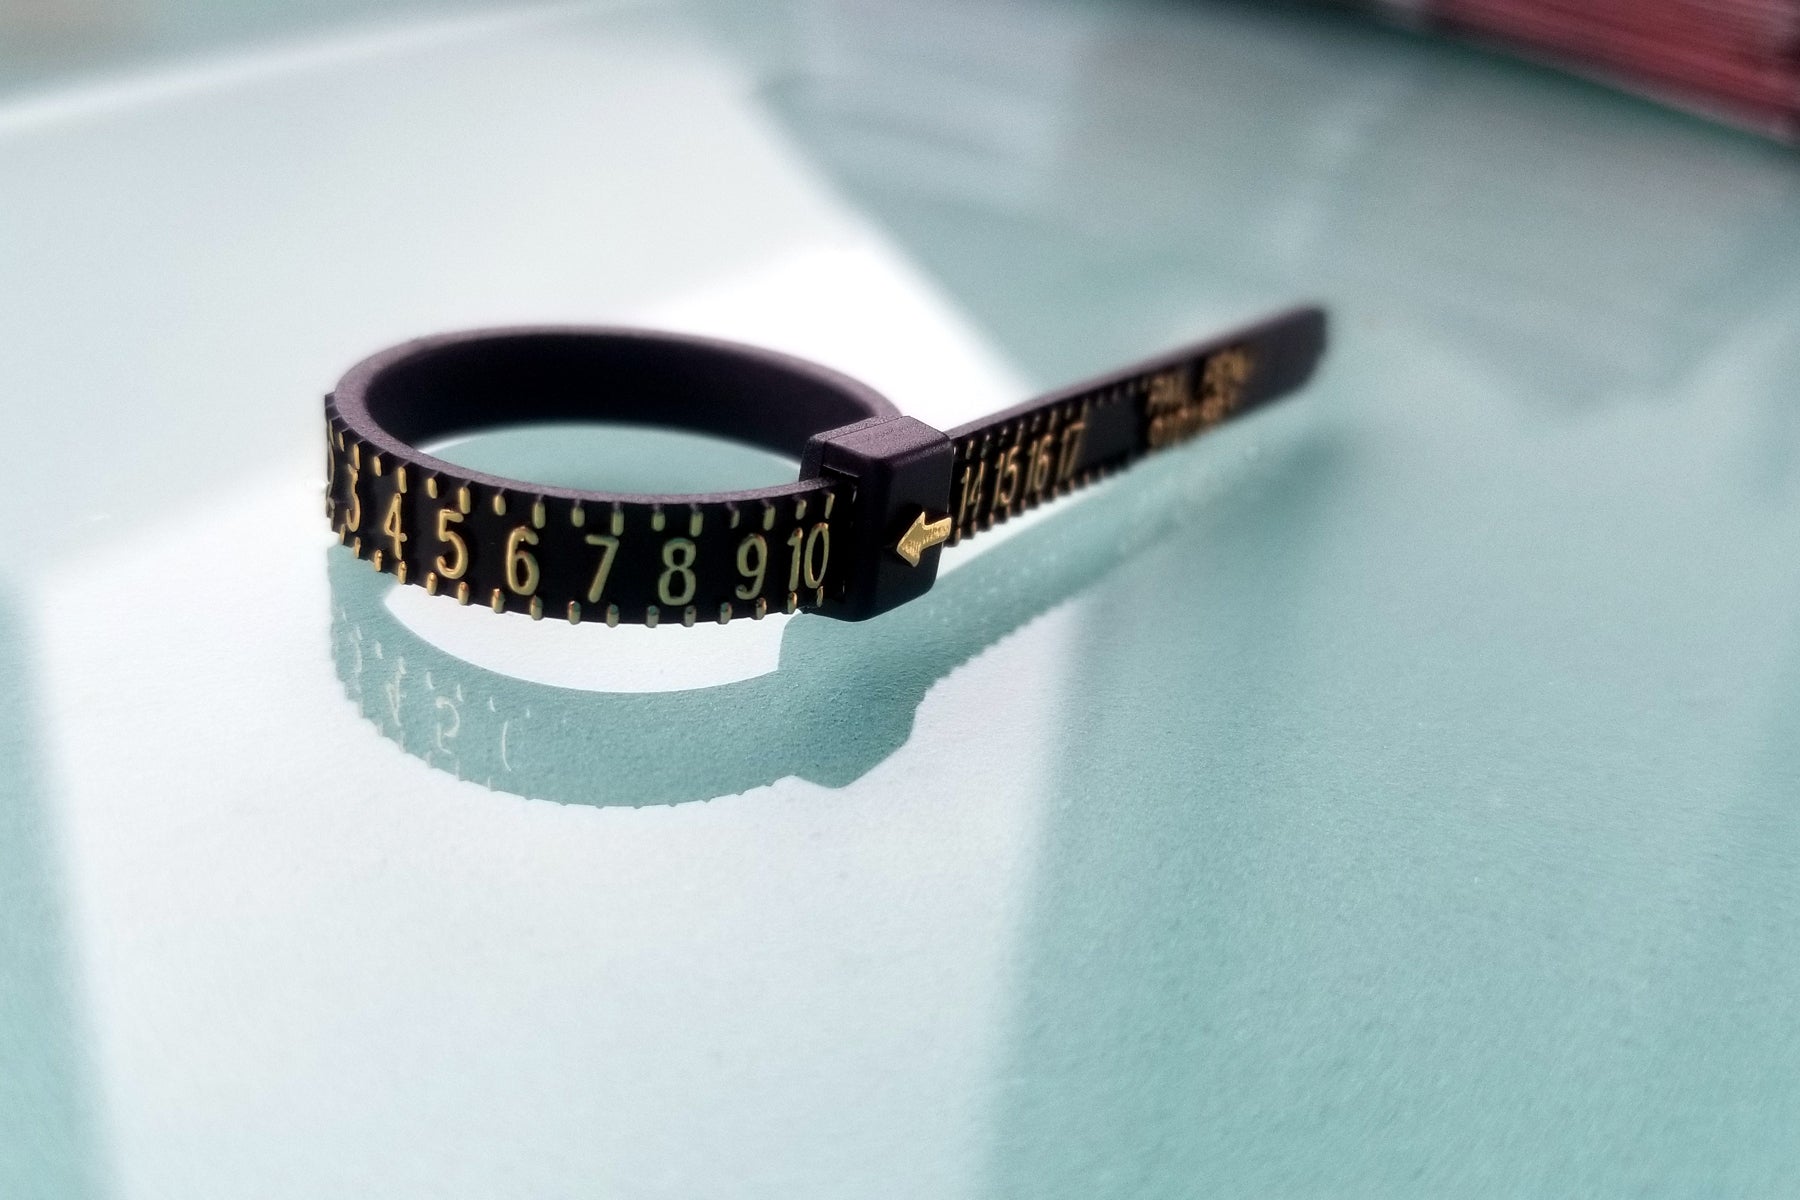 reusable plastic ring sizer - multisizer, measuring tool, finger ruler –  Lisa M. Cantalupo